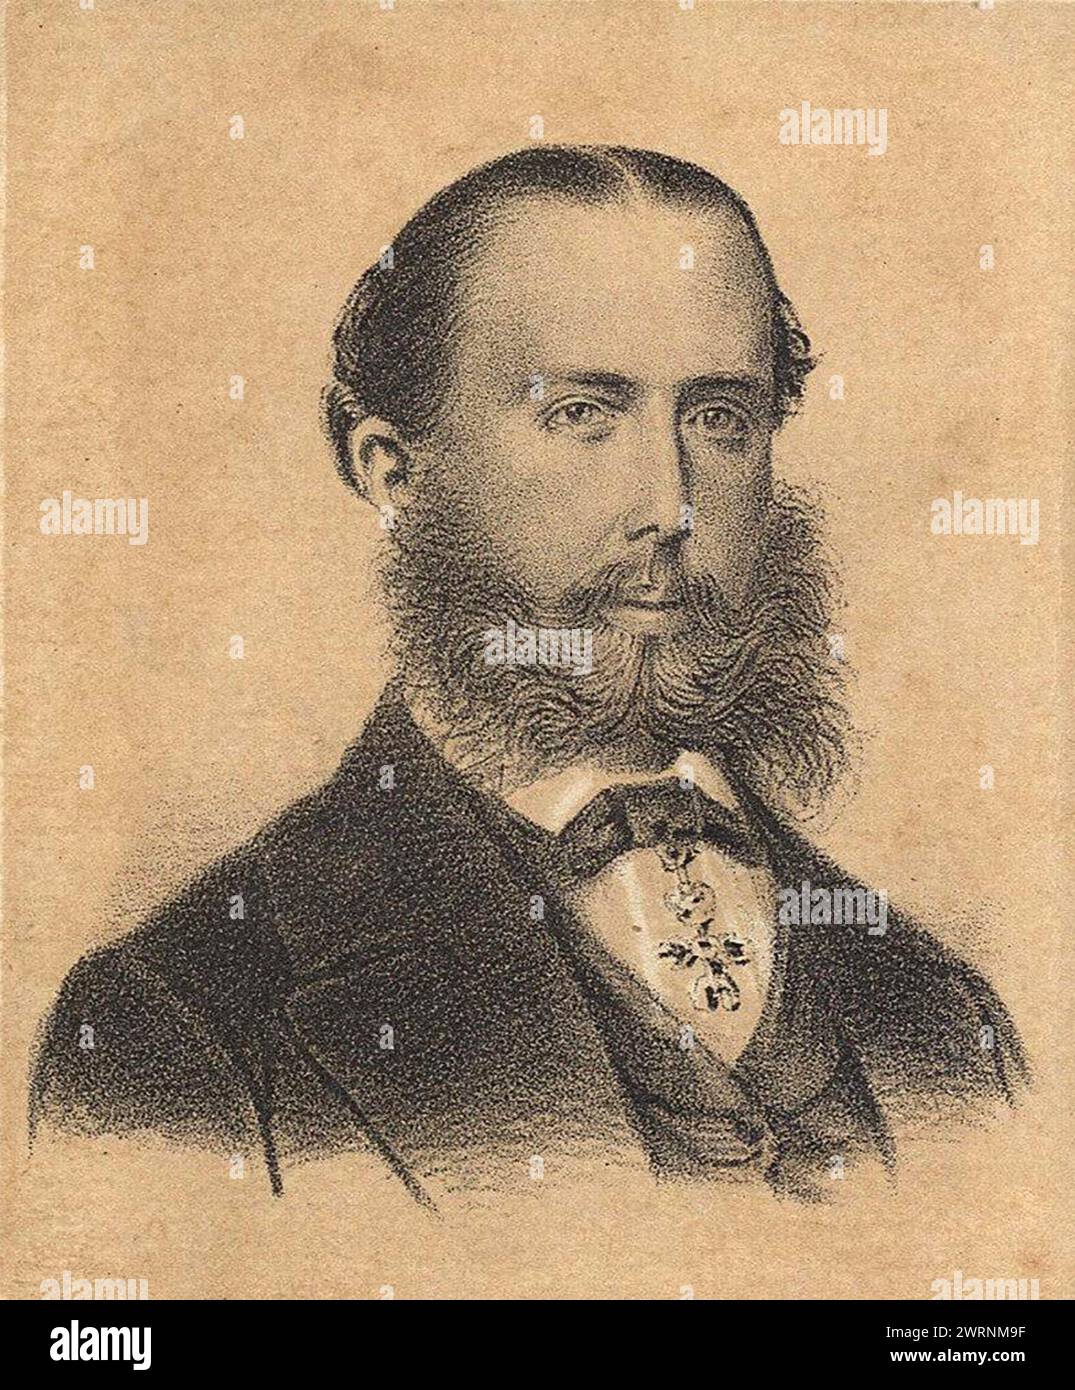 Drawing (lithograph) of Ferdinand Maximilian Joseph or Maximilian I, Emperor of Mexico  ca. 1867 Stock Photo